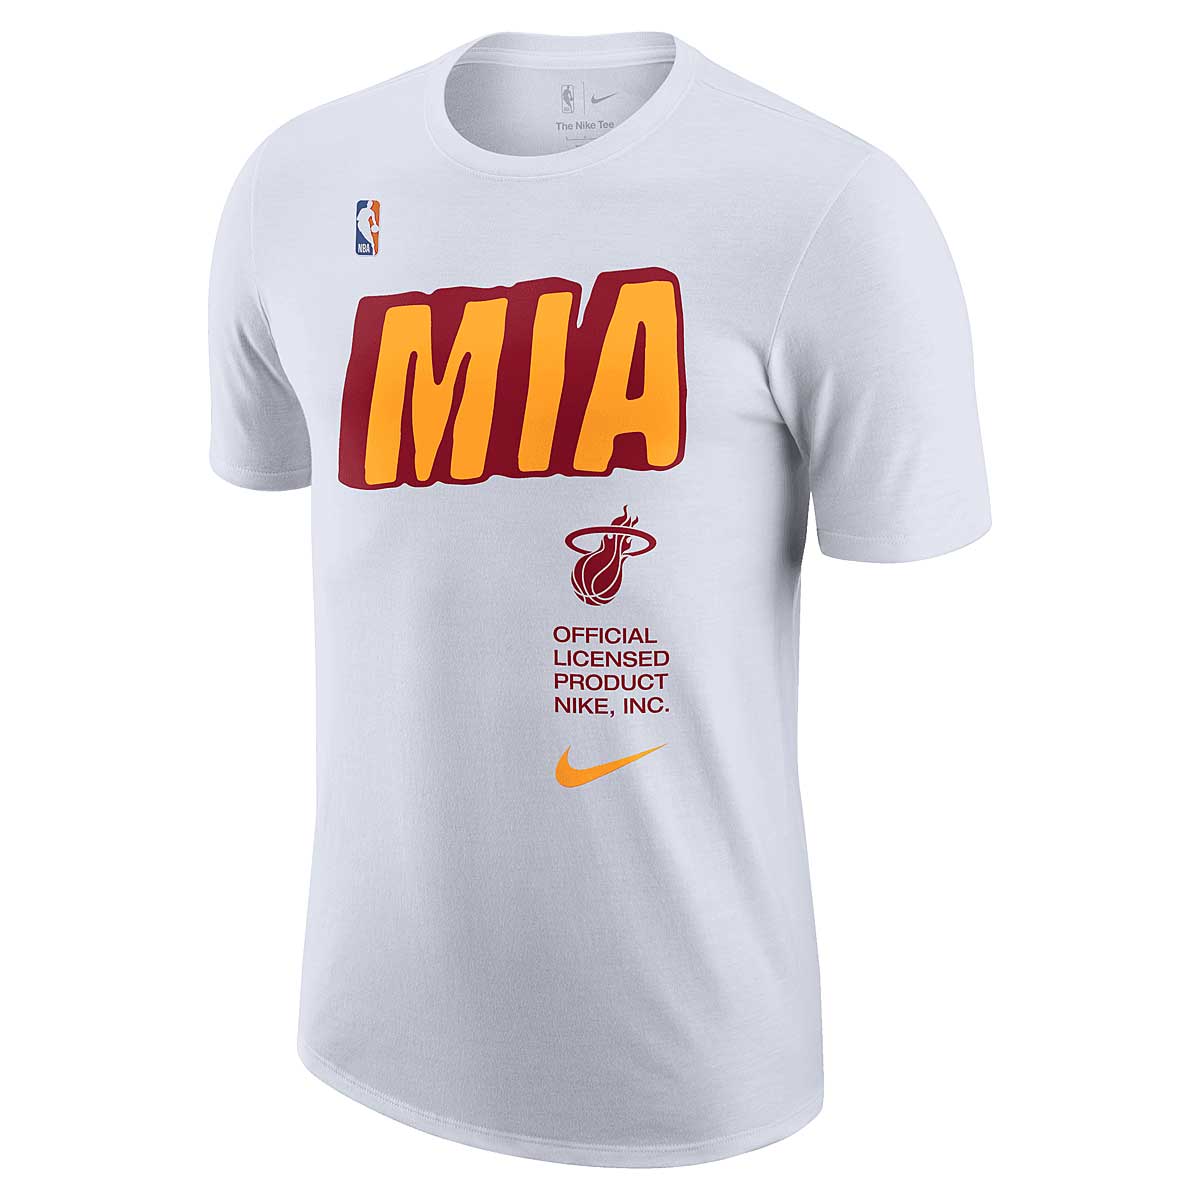 Compre NBA MIAMI HEAT BLOCK T-Shirt por EUR 14.99 en